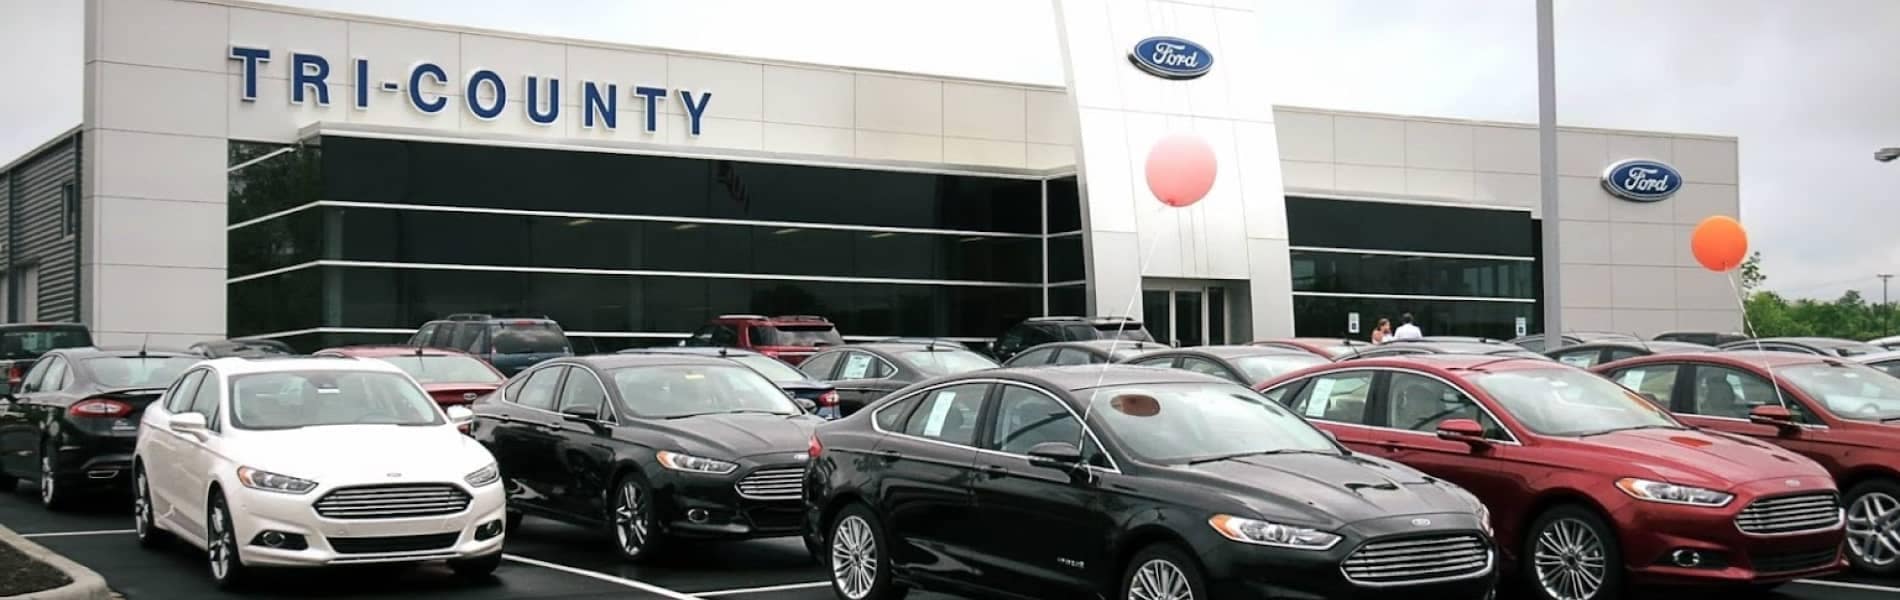 Tri-County Ford dealership